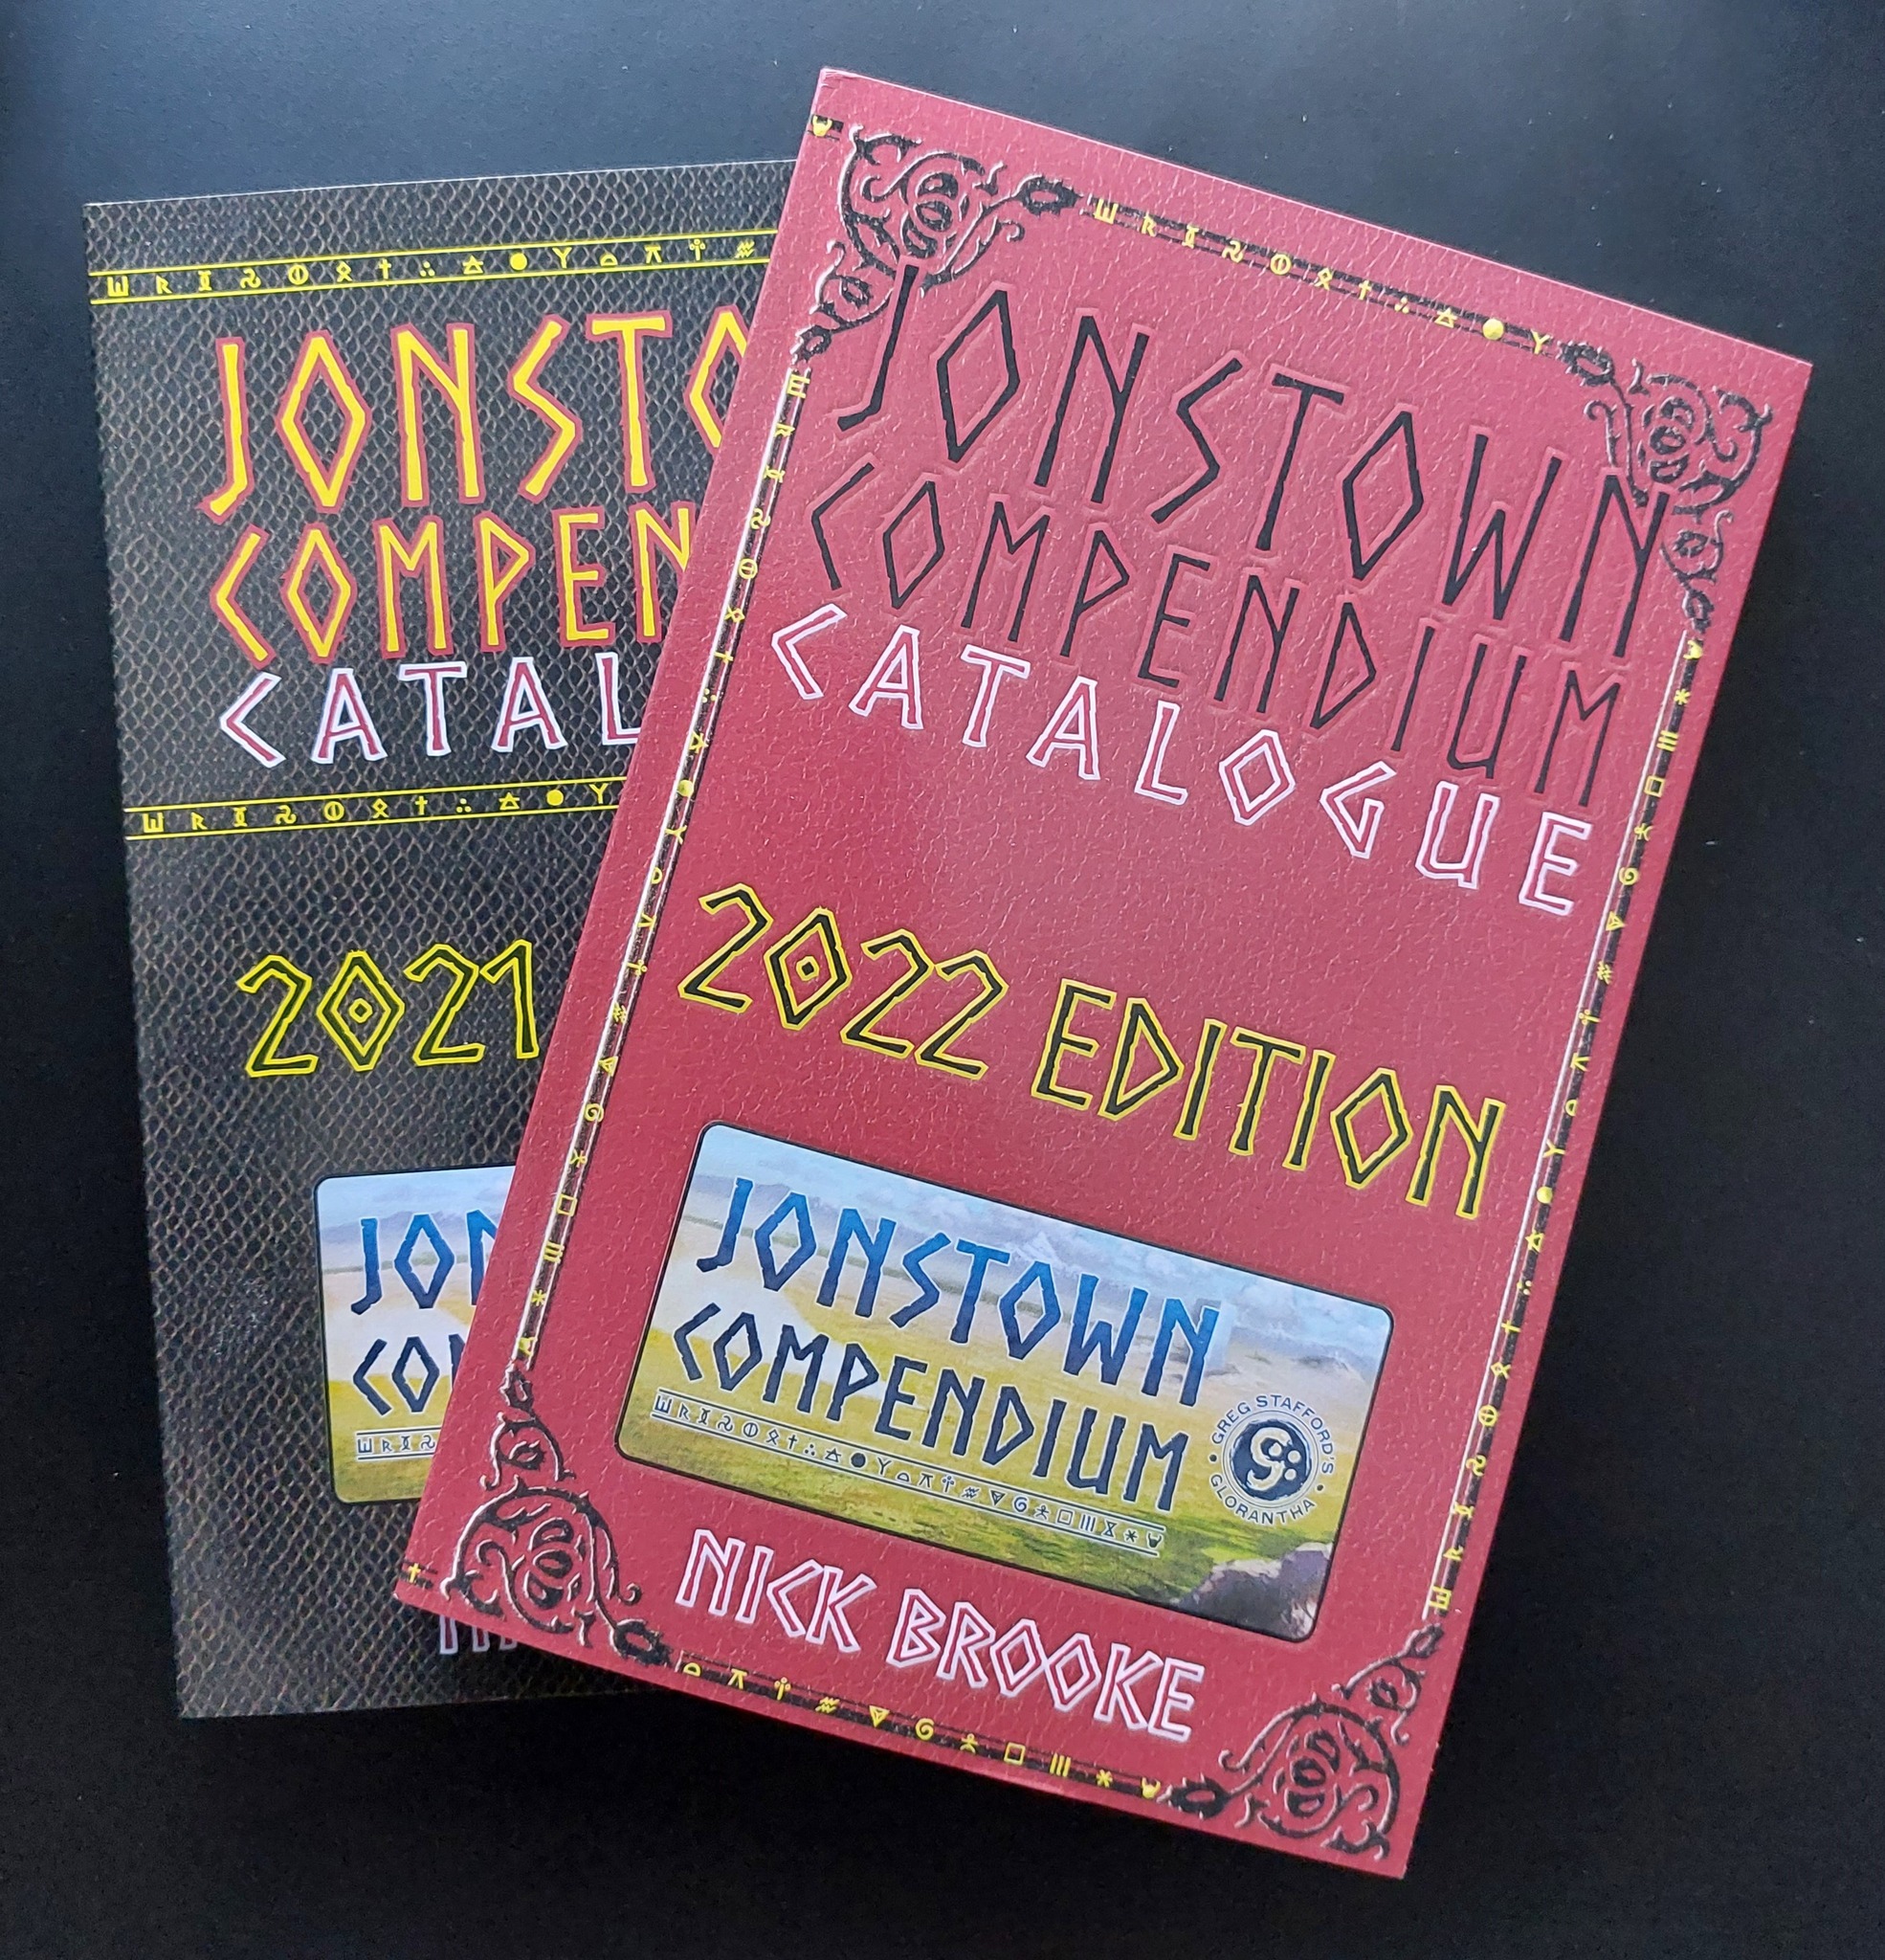 Nick Brooke's 2022 Jonstown Compendium catalogue